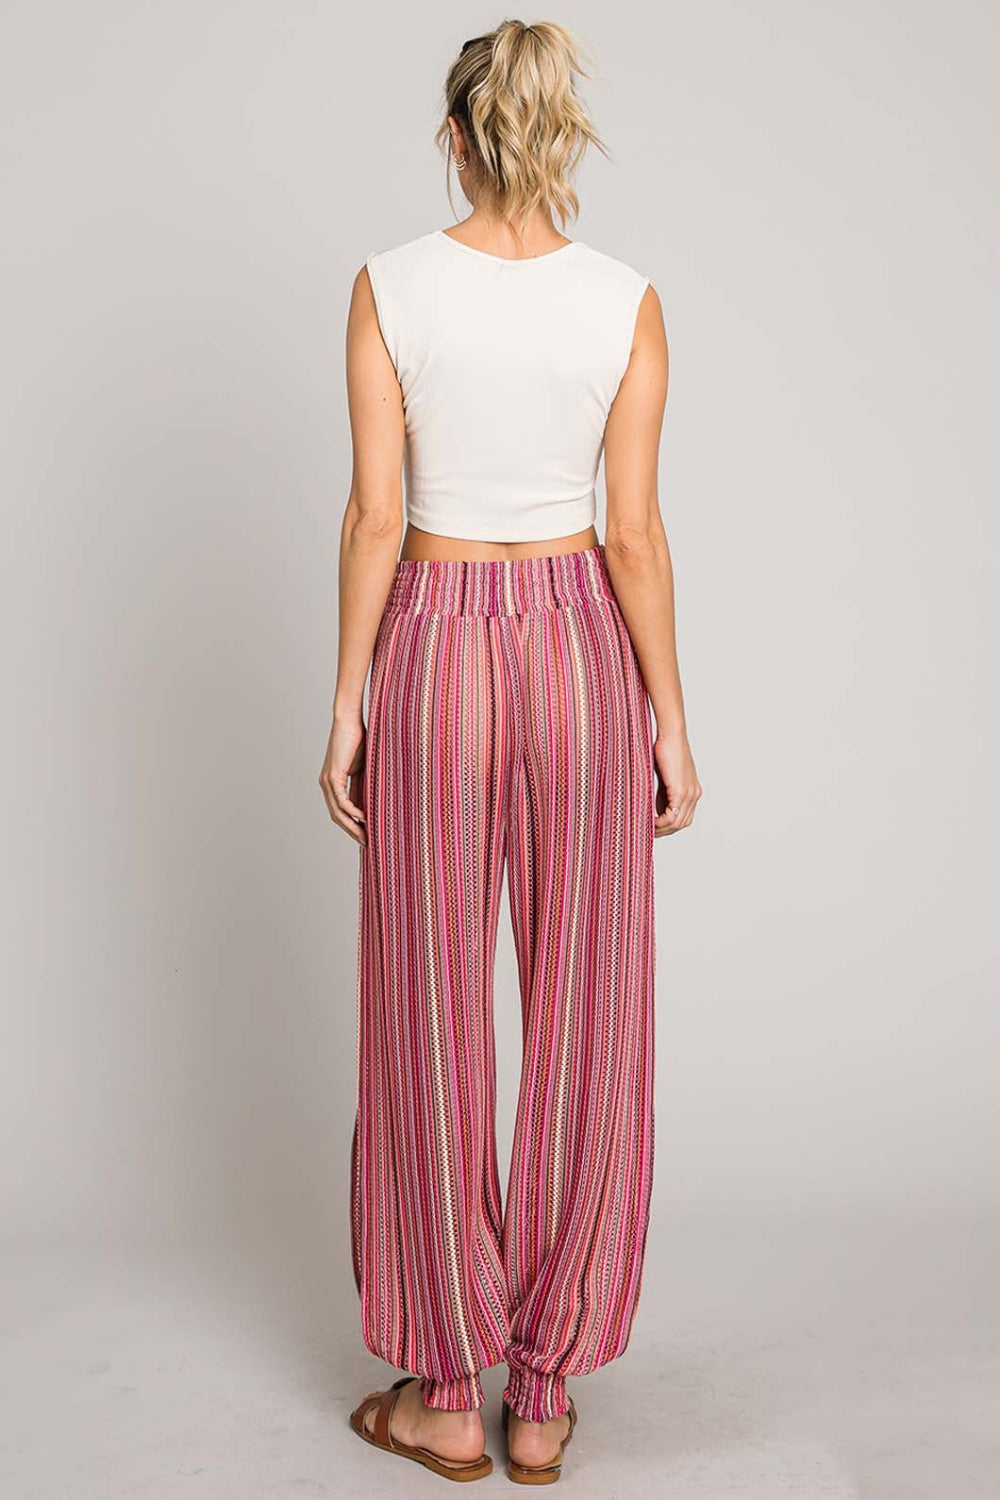 TEEK - Fuchsia Cotton Striped Smocked Cover Up Pants PANTS TEEK Trend   